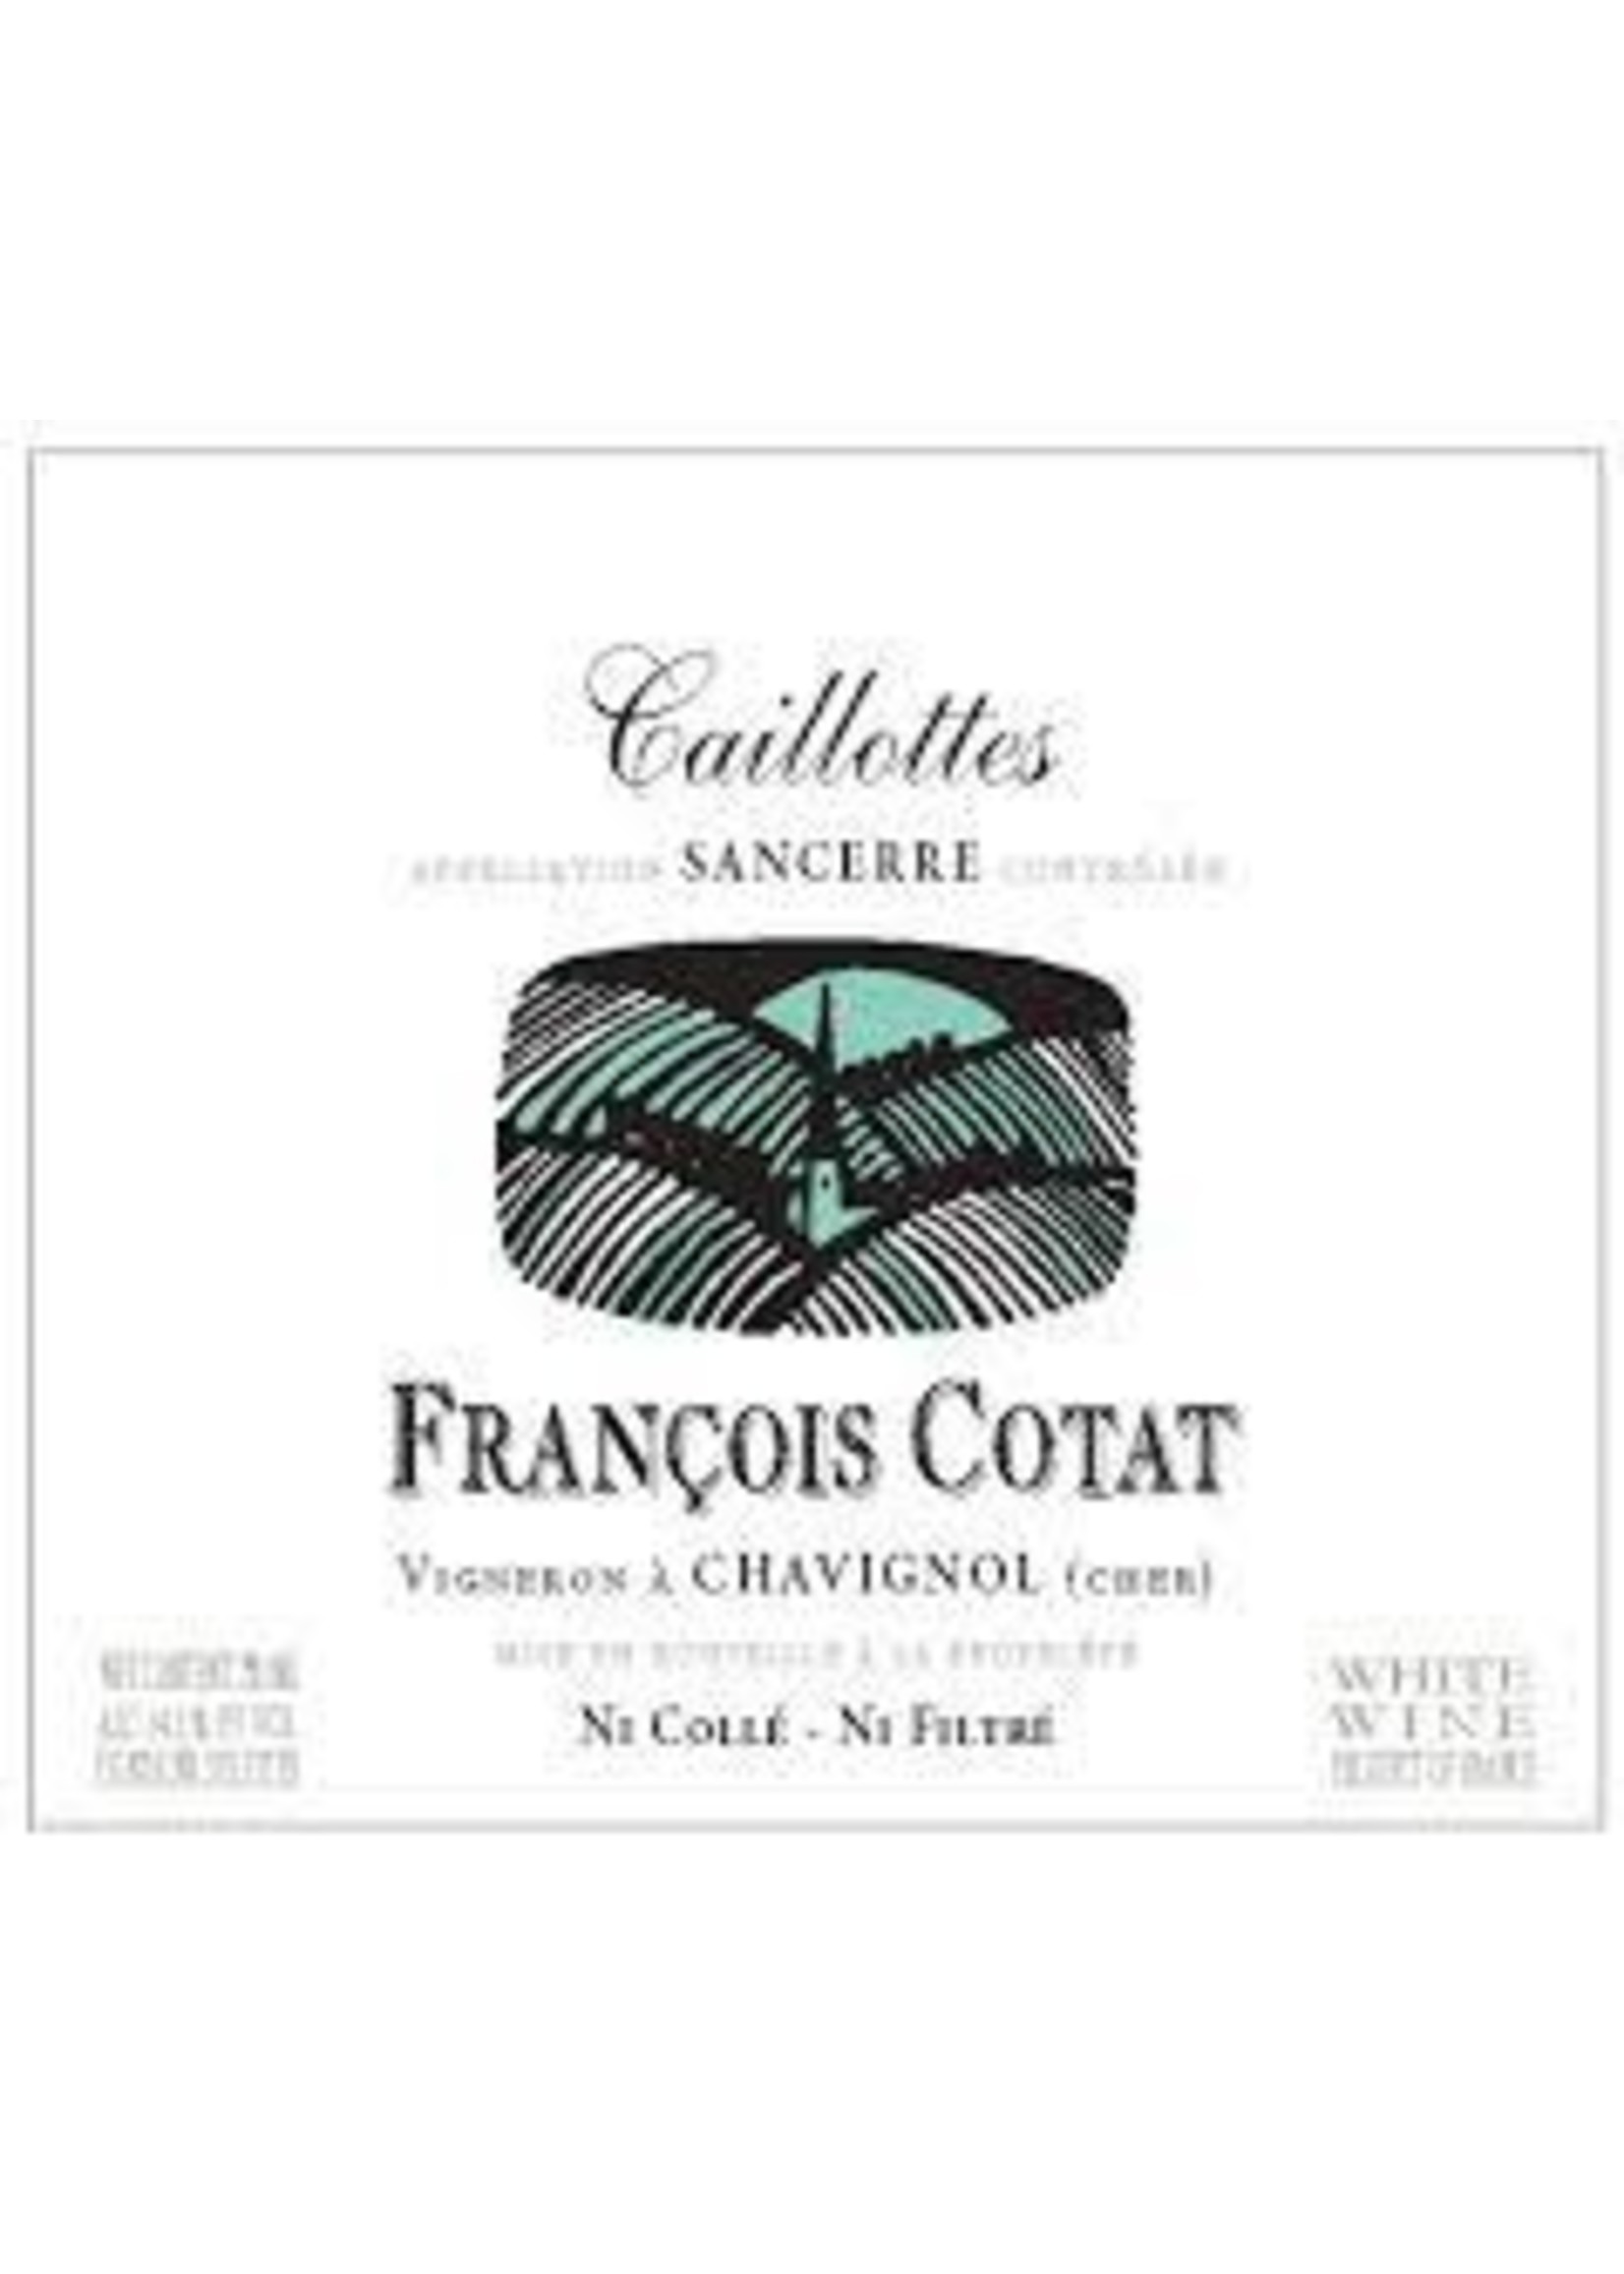 Francois Cotat 2020 Sancerre Caillottes 750ml